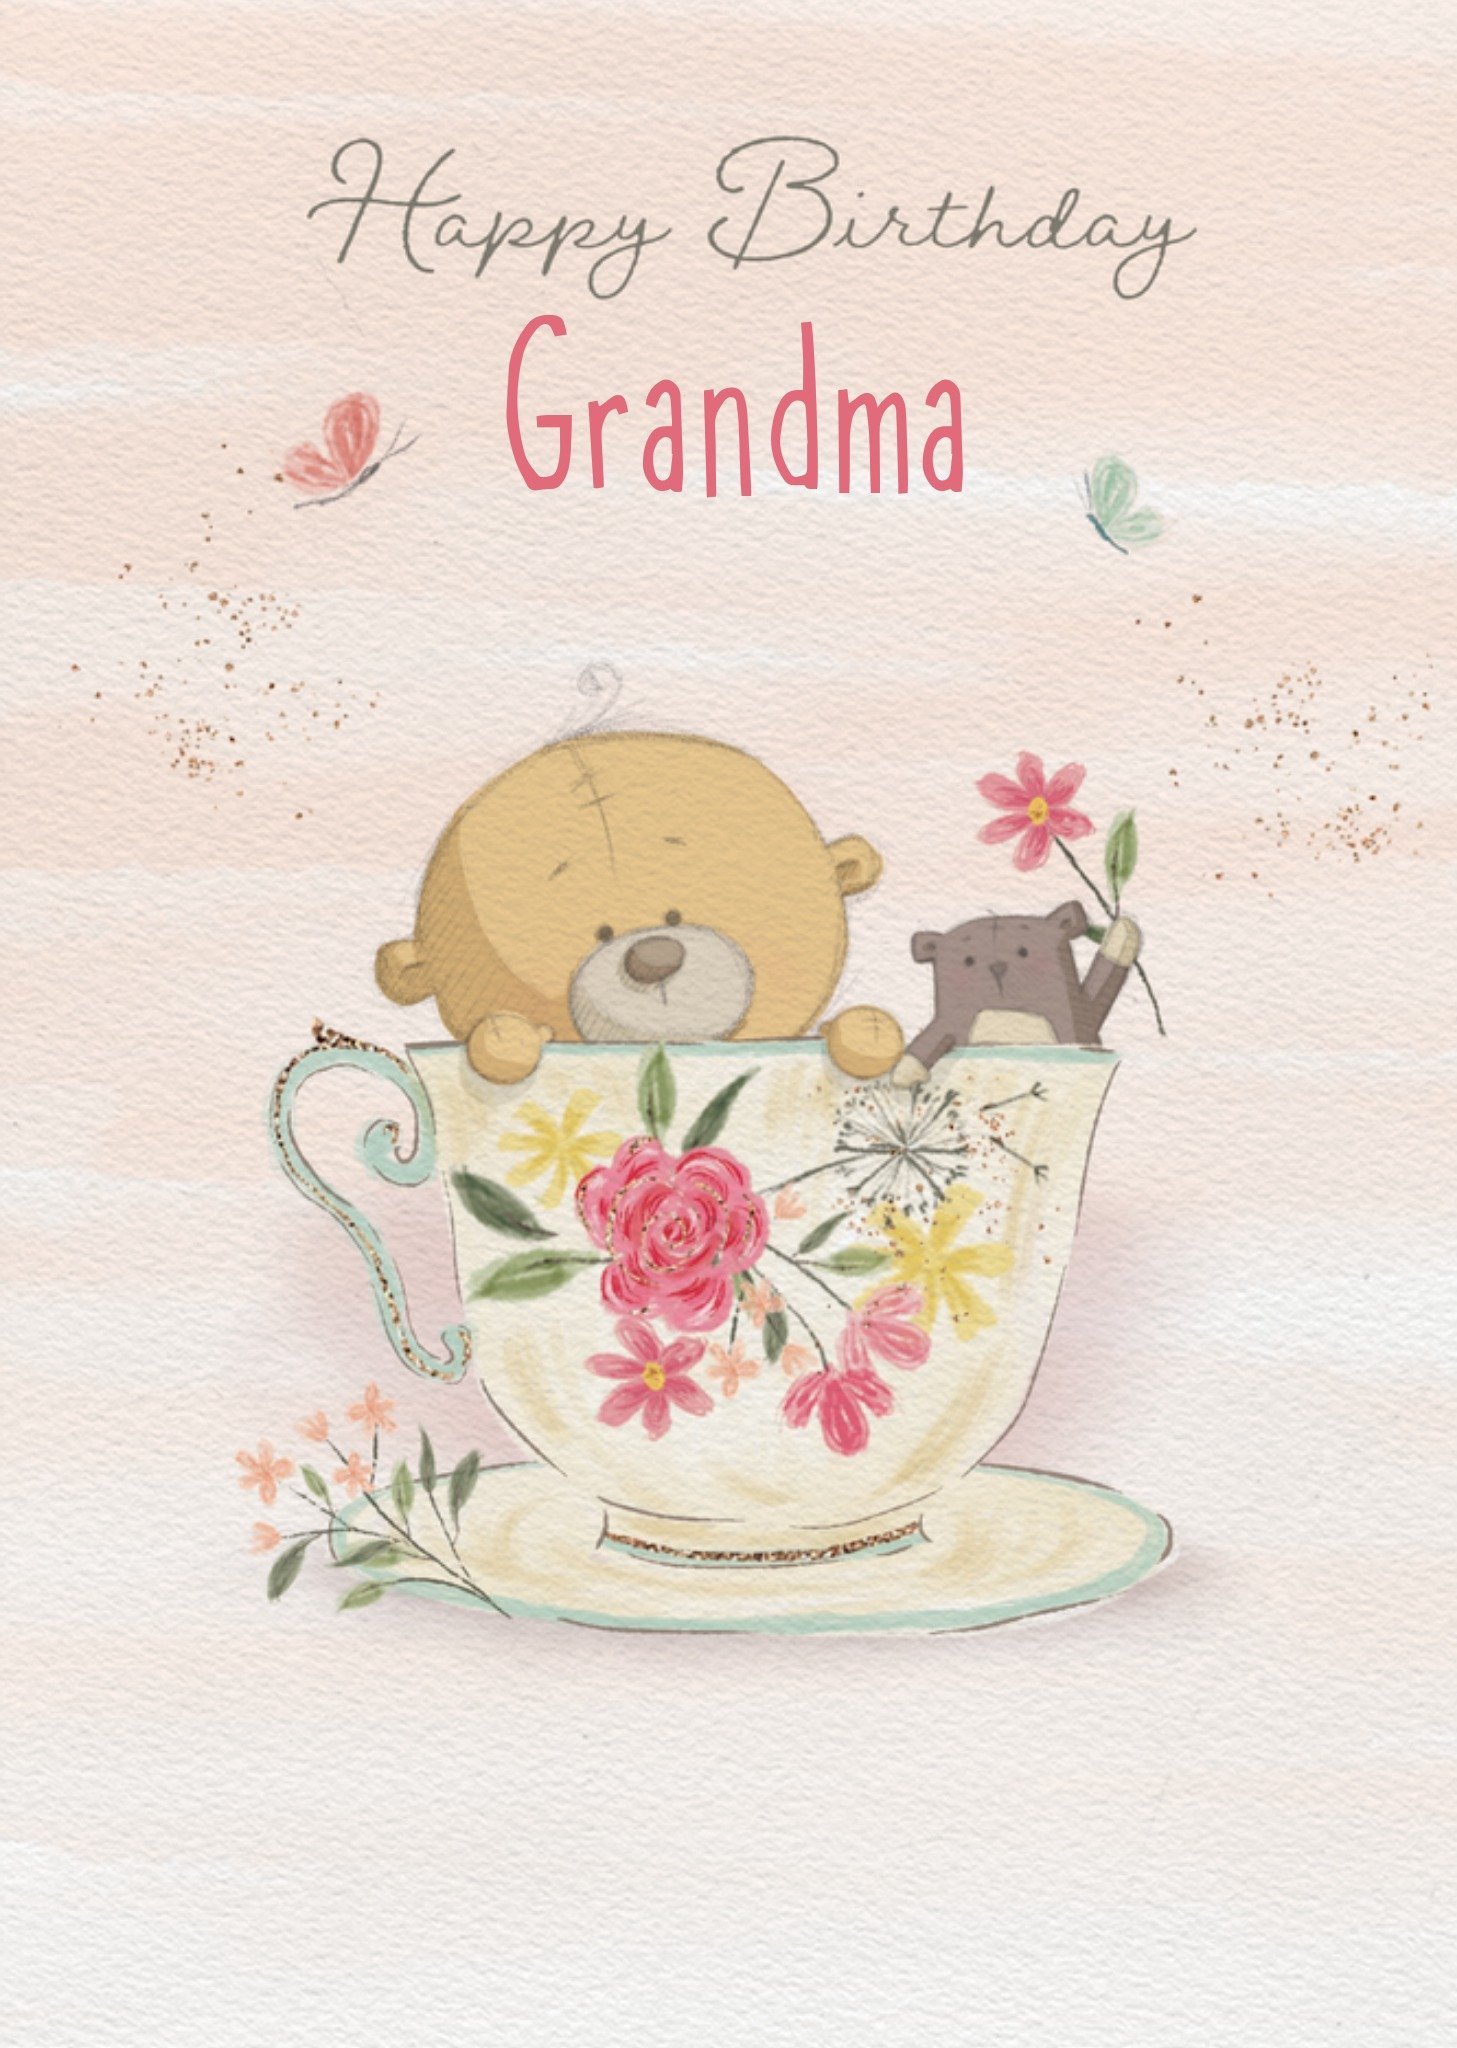 Uddle Happy Birthday Grandma Illustrated Teacup And Saucer Birthday Card, Large